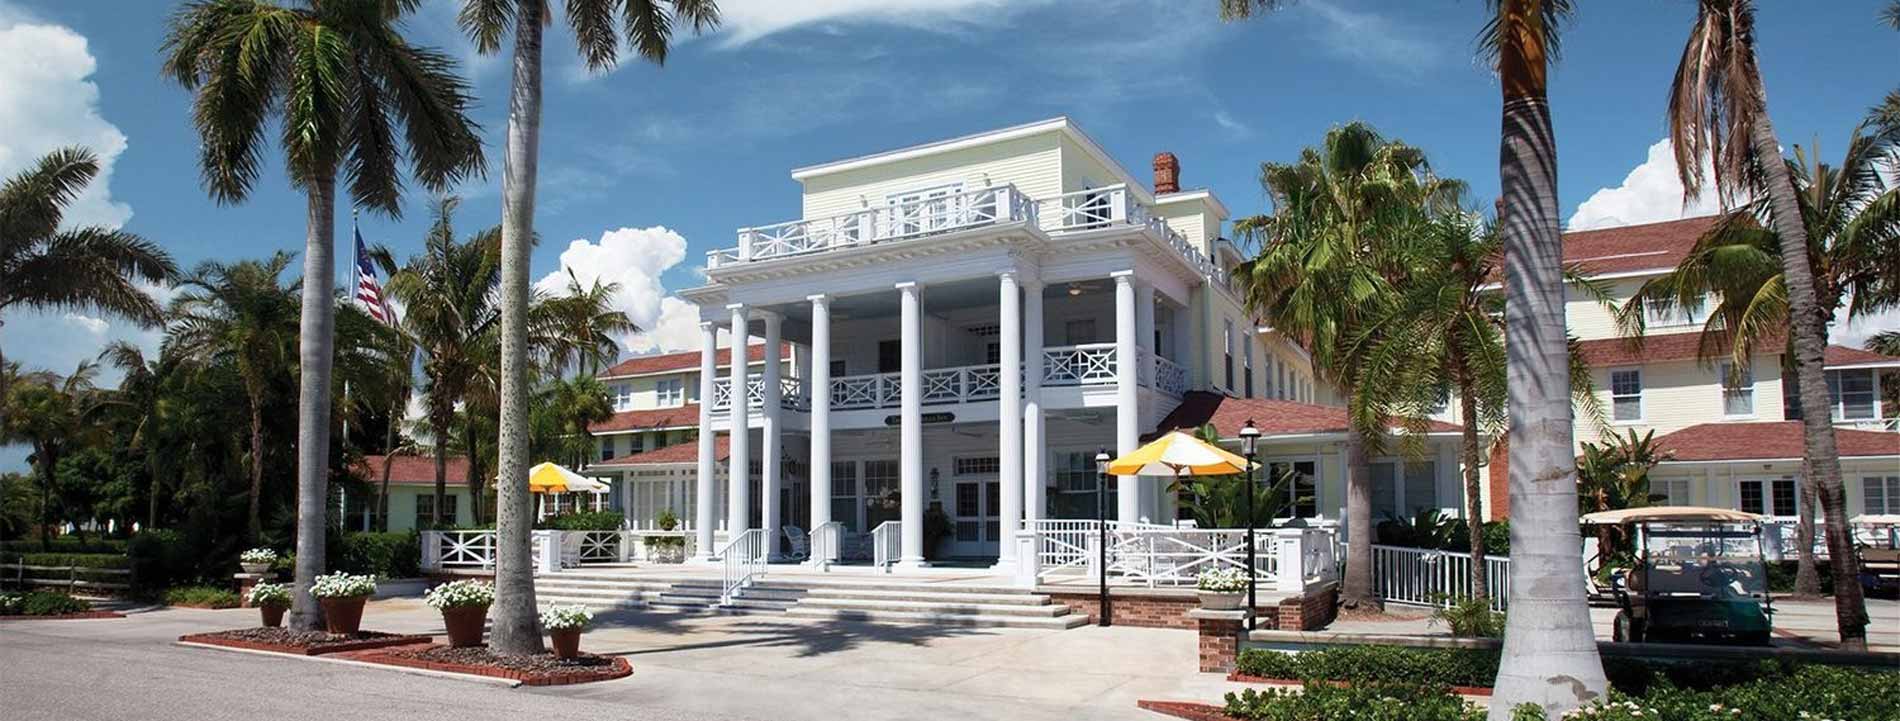 Gasparilla Inn and Club in Boca Grande, Florida.